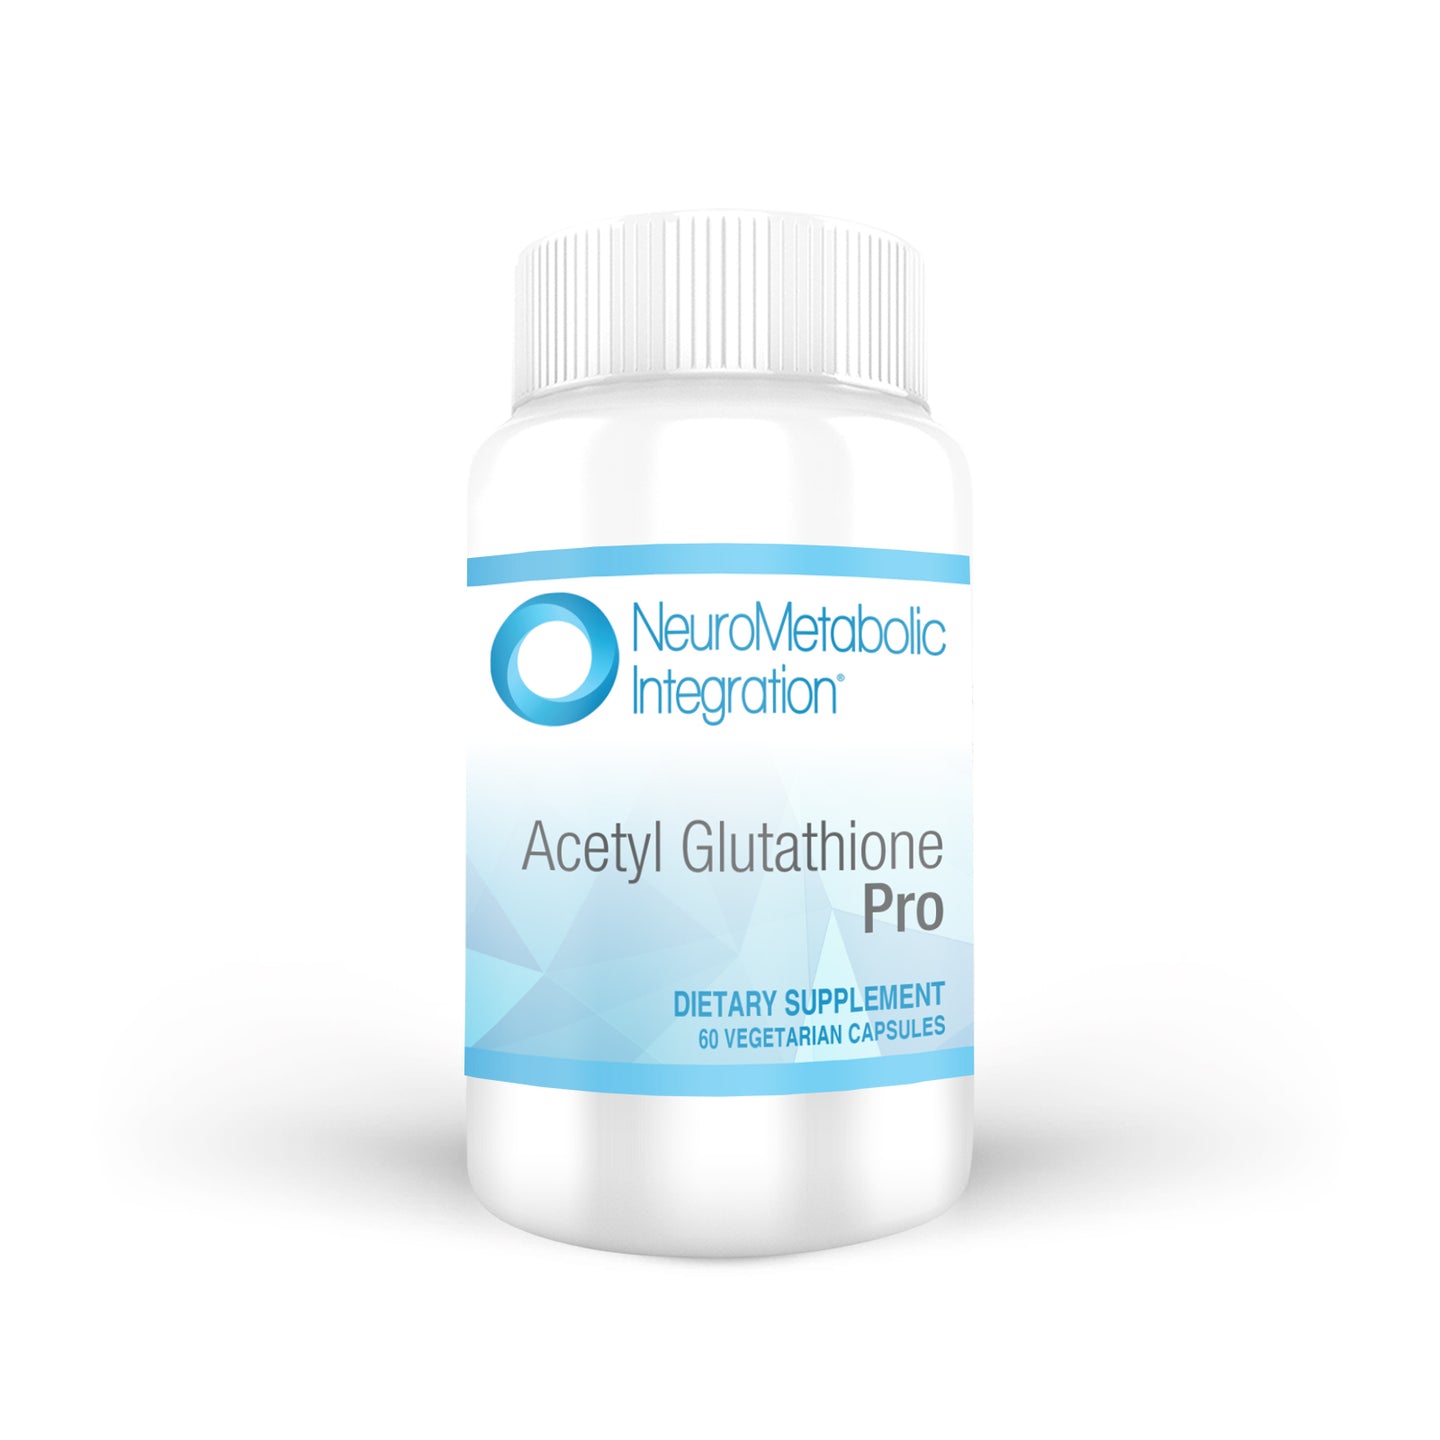 Acetyl Glutathione Pro - 60 cap